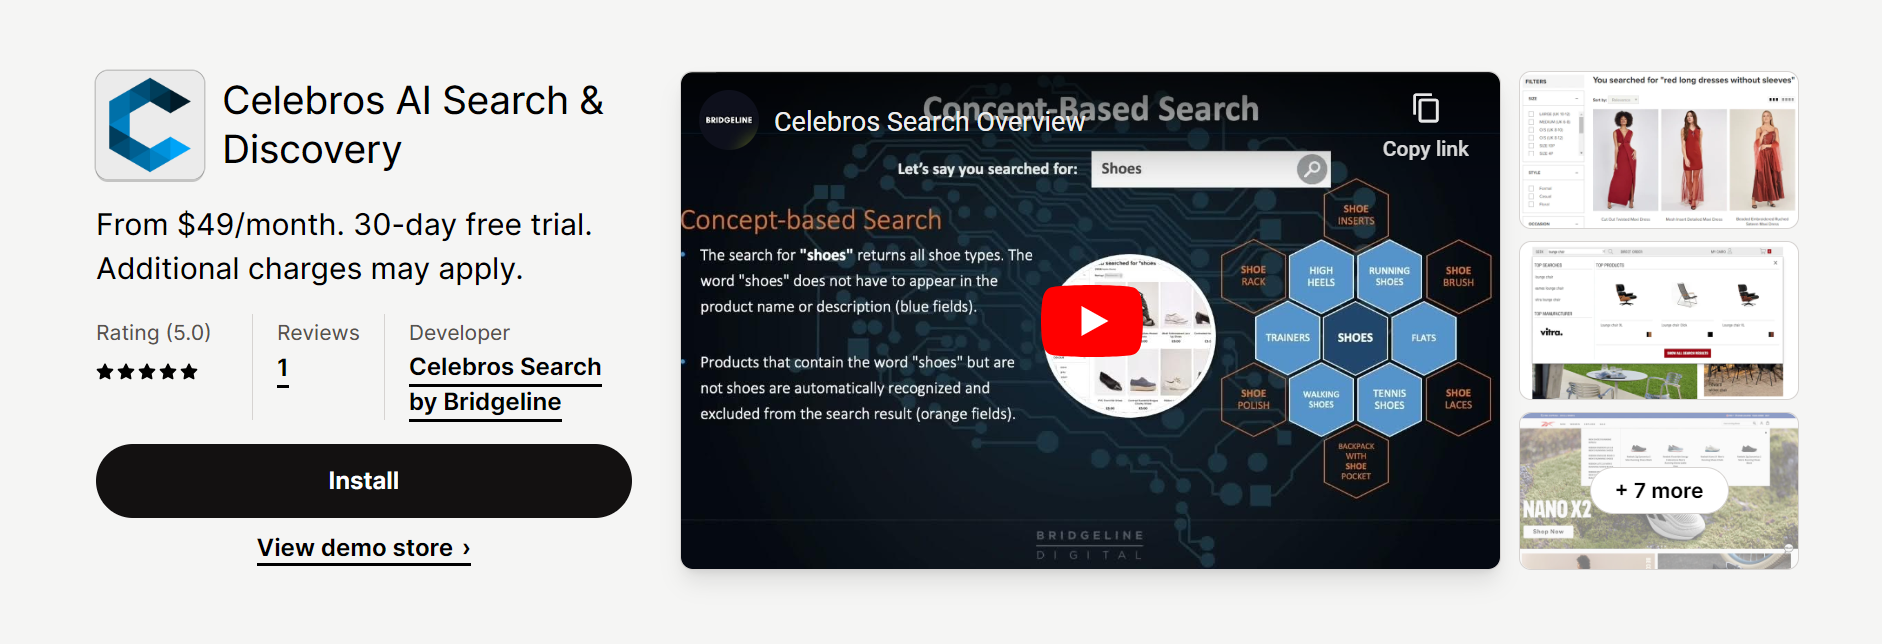 Celebros AI Search & Discovery